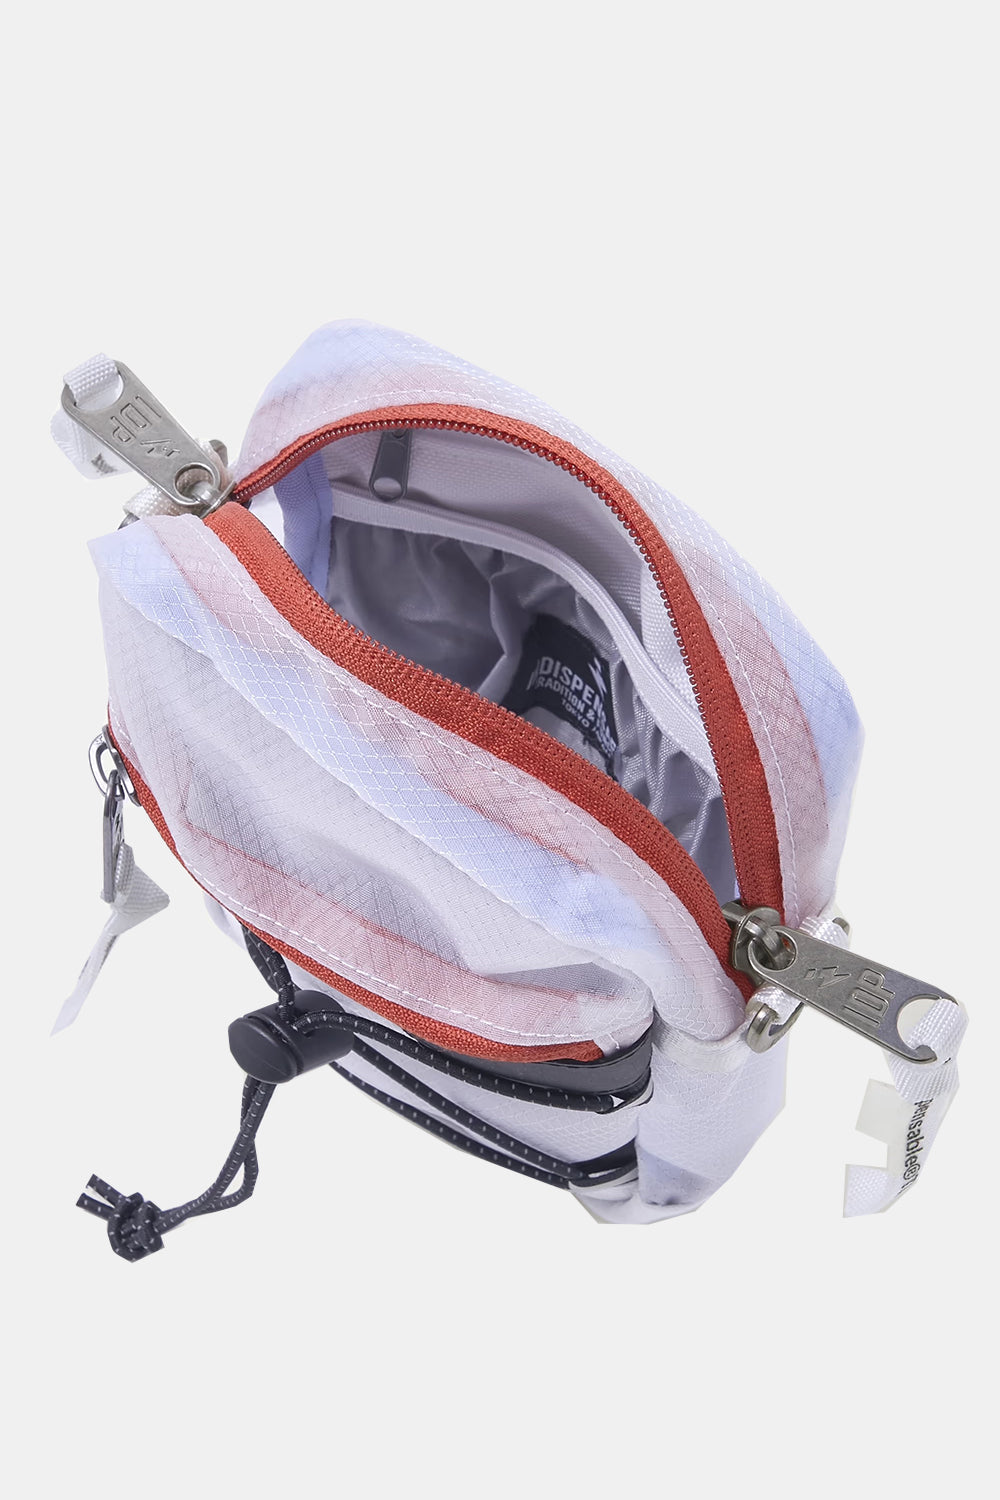 Indispensable IDP Shoulder Bag Litt St - Clear | Number Six